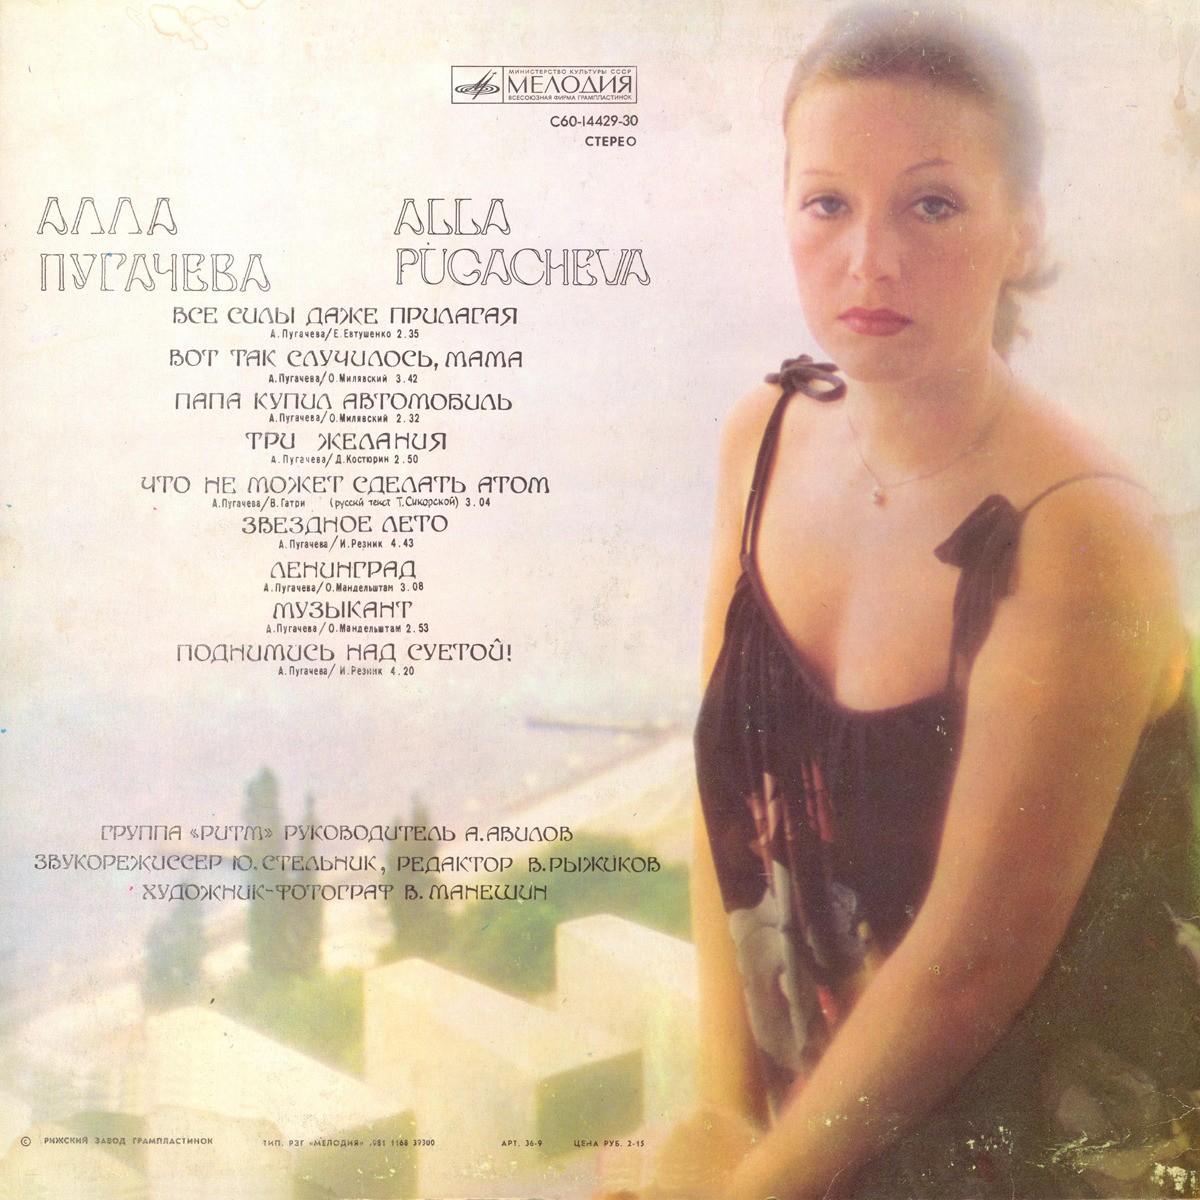 Alla Pugacheva, álbum "Lift above the vanity" (Levante acima da vaidade!)